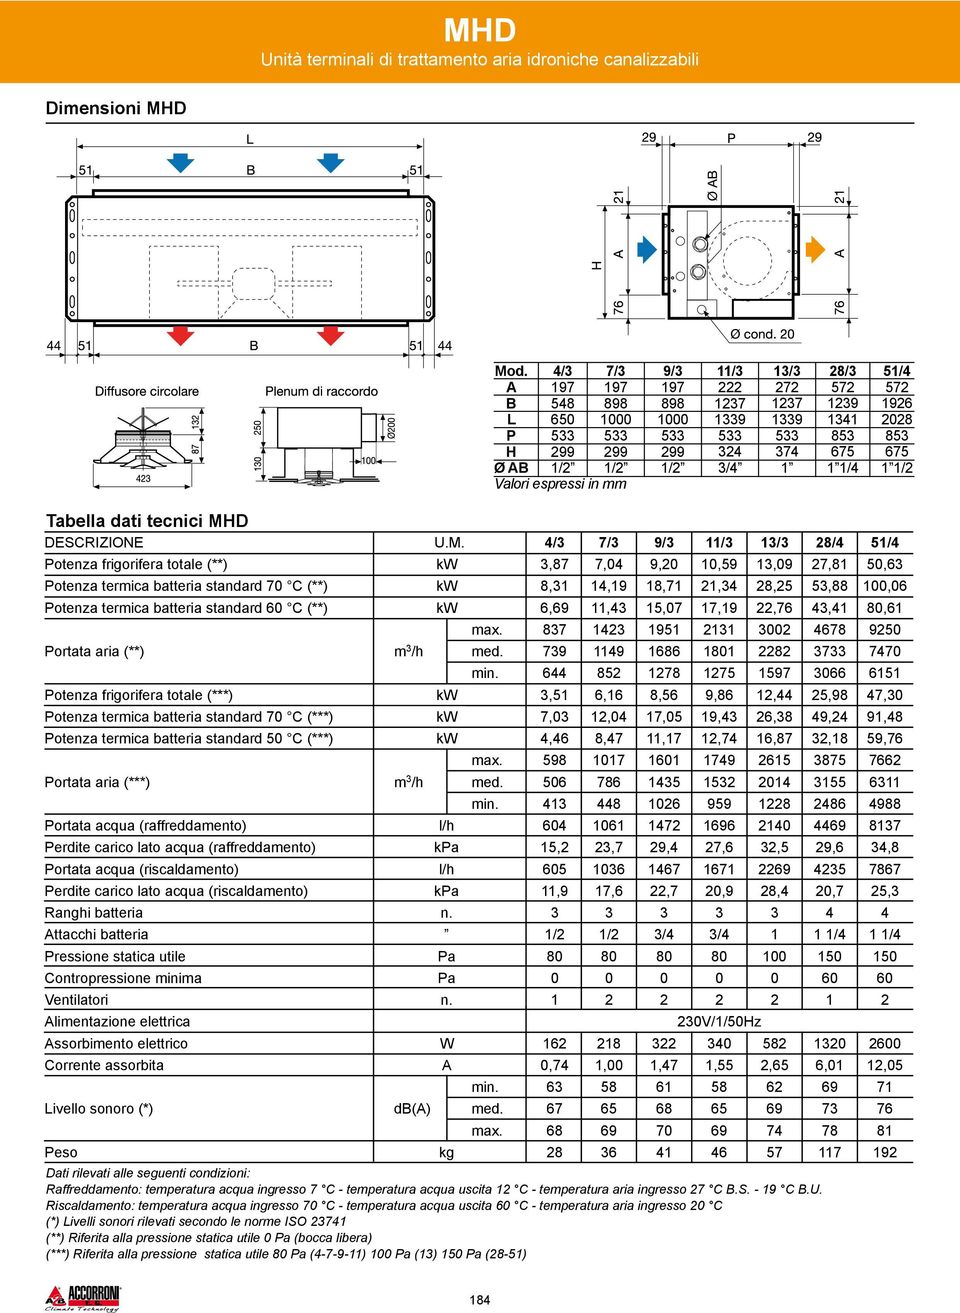 frigorifera totale (**) Potenza termica batteria standard 7 C (**) Potenza termica batteria standard 6 C (**) Portata aria (**) Potenza frigorifera totale (***) Potenza termica batteria standard 7 C